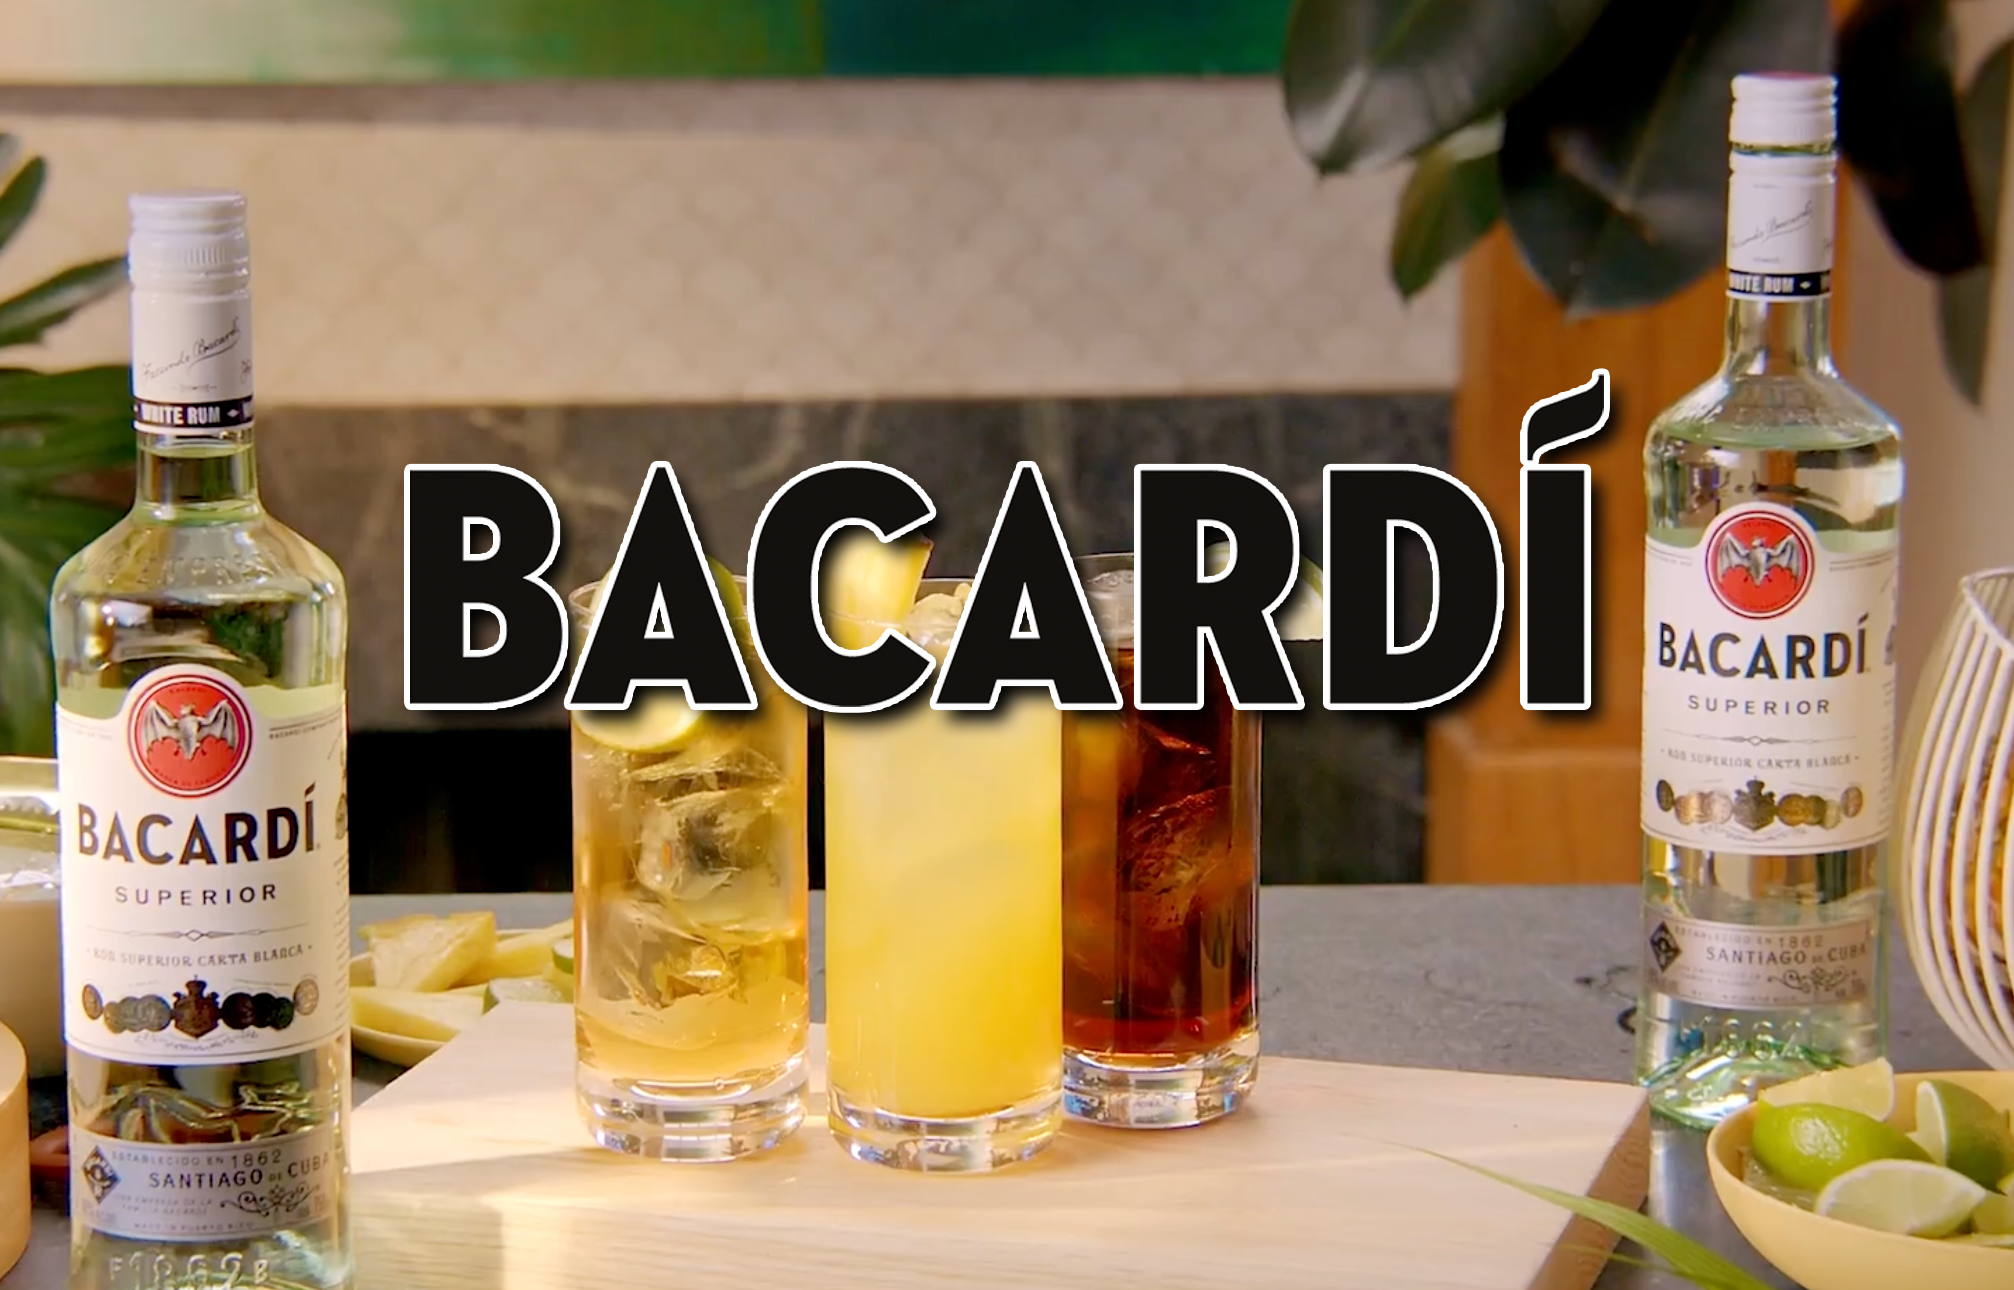 Bacardi|https://vimeo.com/736240844/34b25bd813